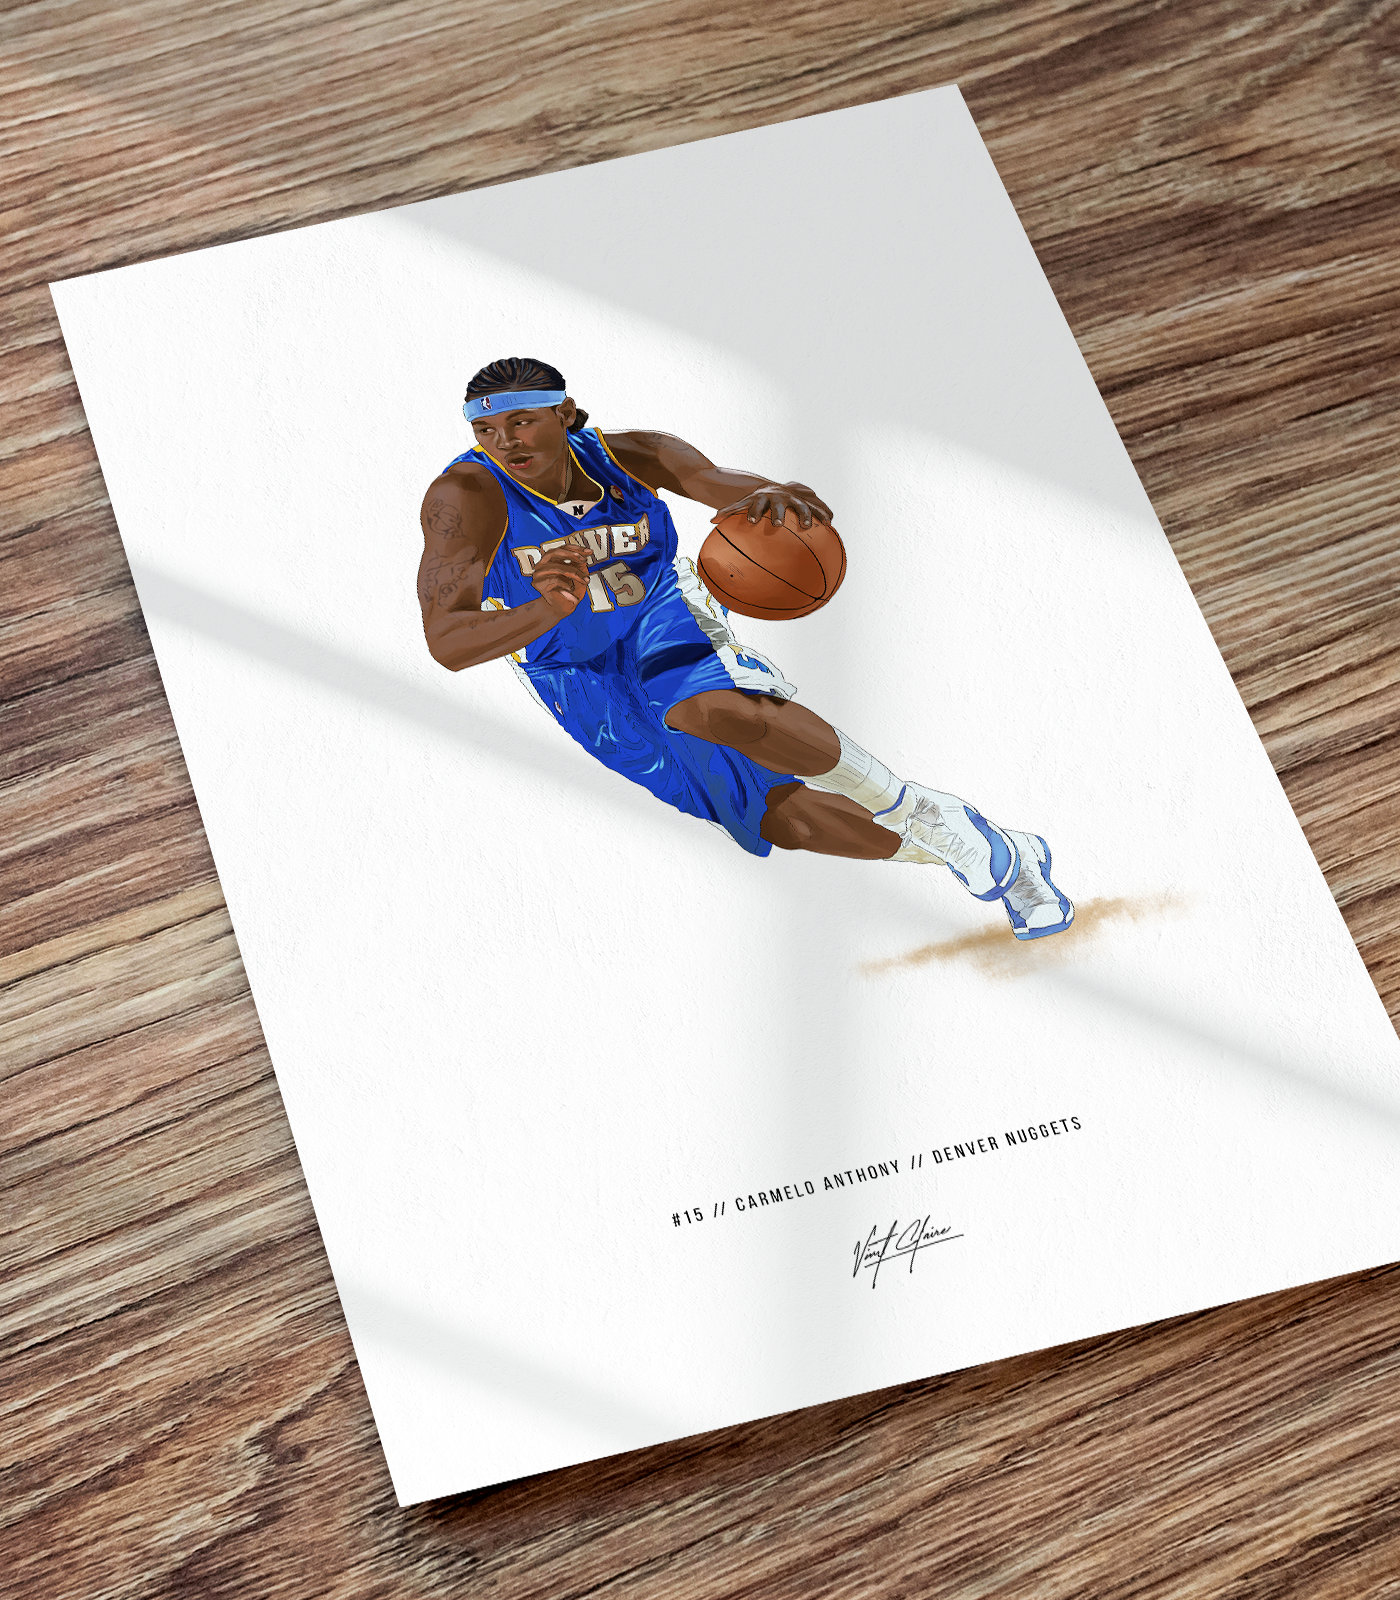 Download Carmelo Anthony NBA Game Denver 15 Wallpaper